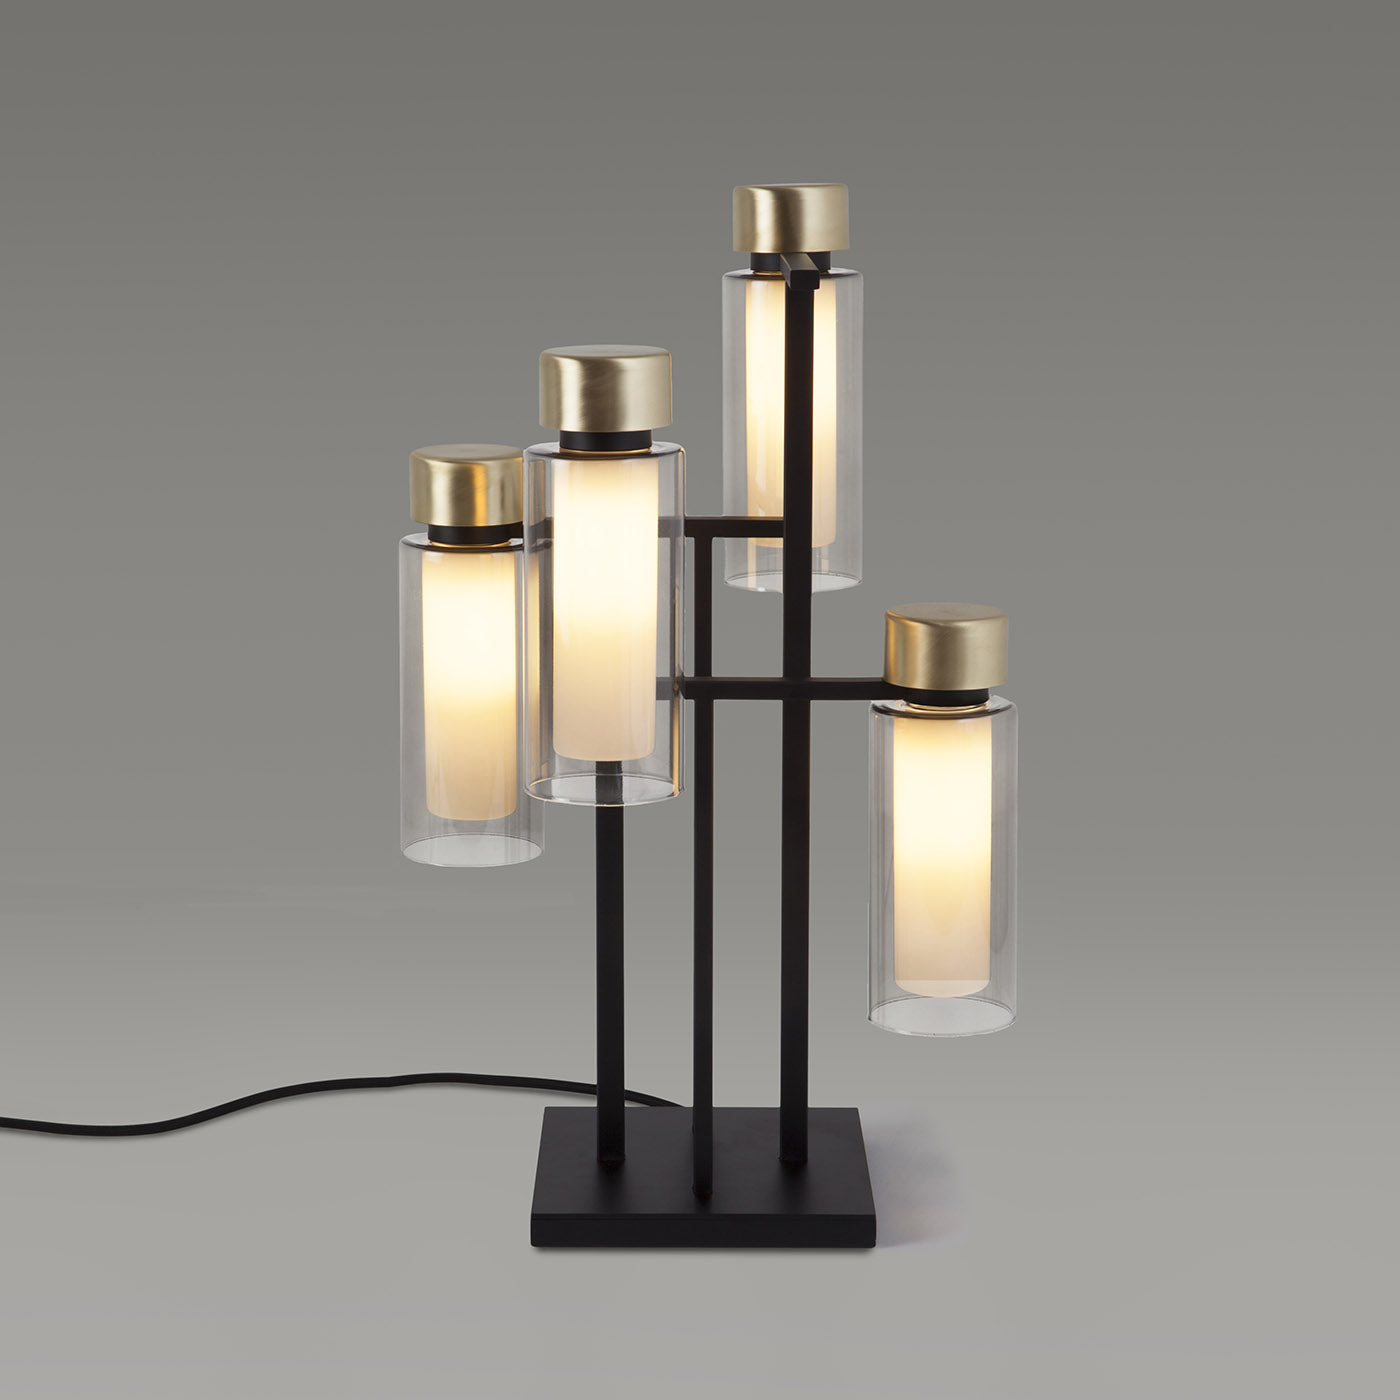 Osman 4-Light Table Lamp by Corrado Dotti - Alternative view 1